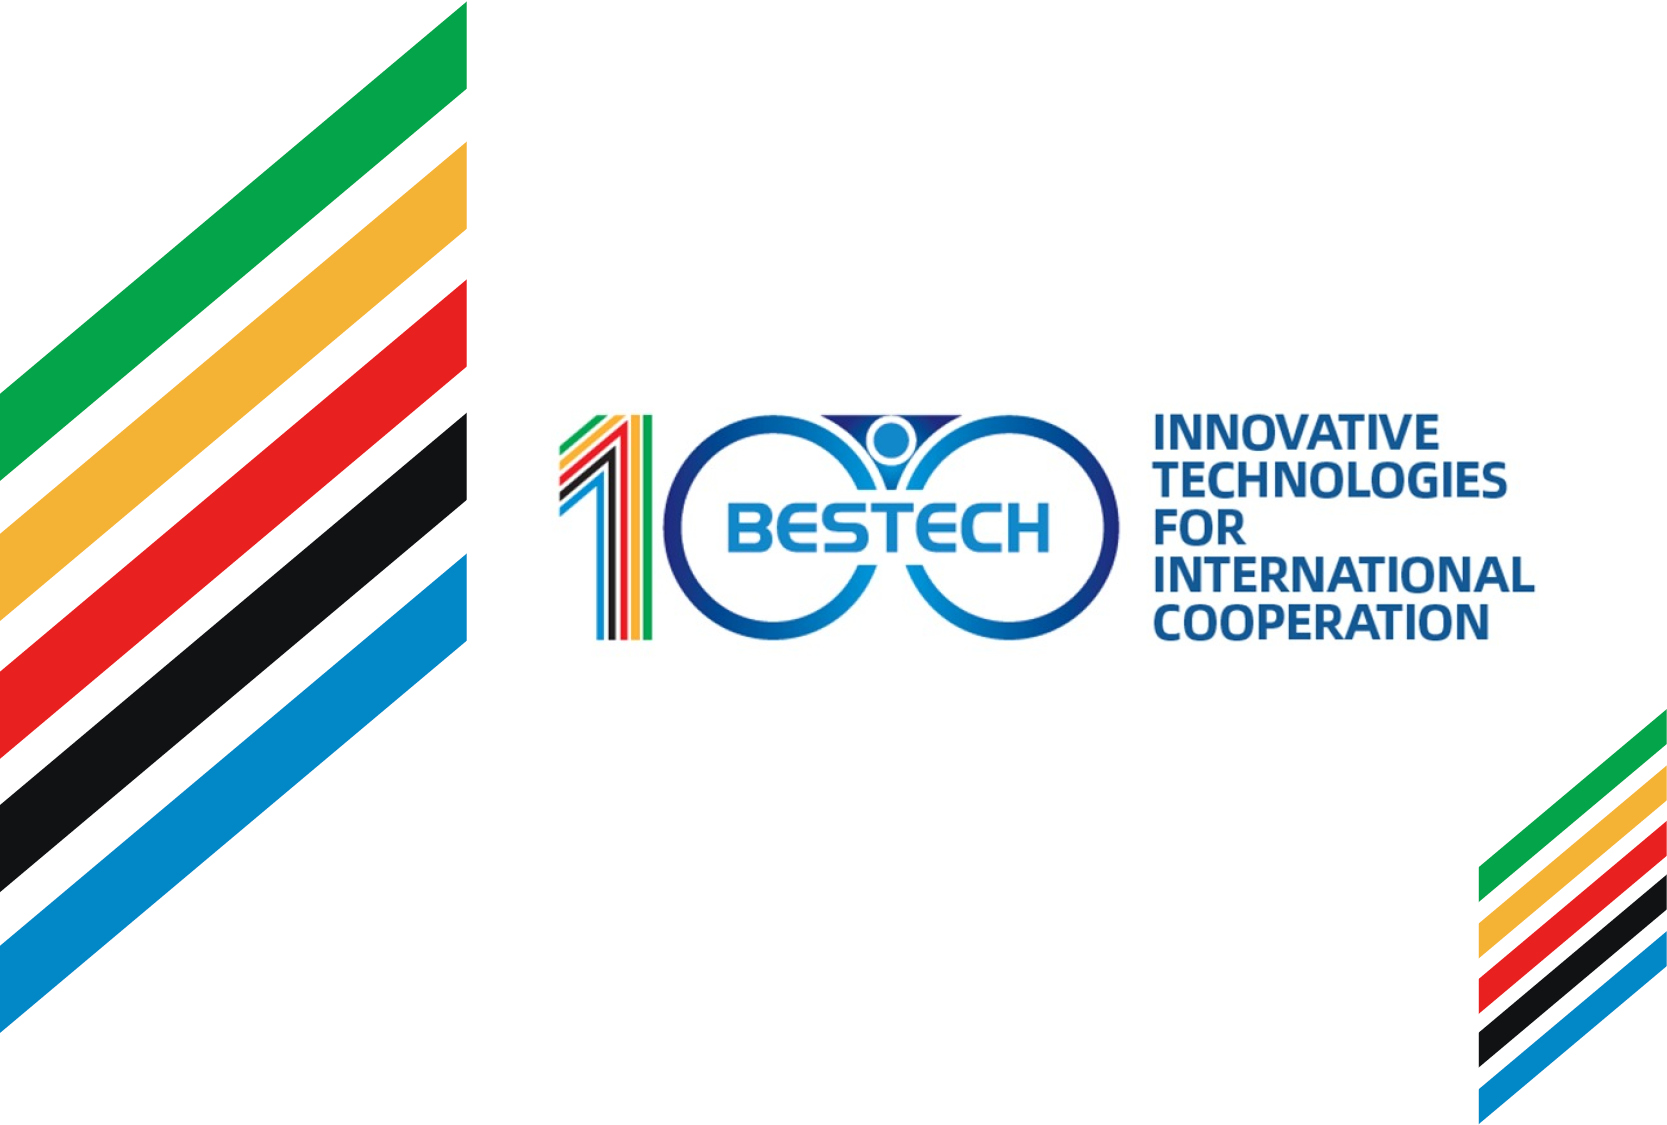 ZGC Forum 2022 – “100 Best Innovative Technologies for International Cooperation”